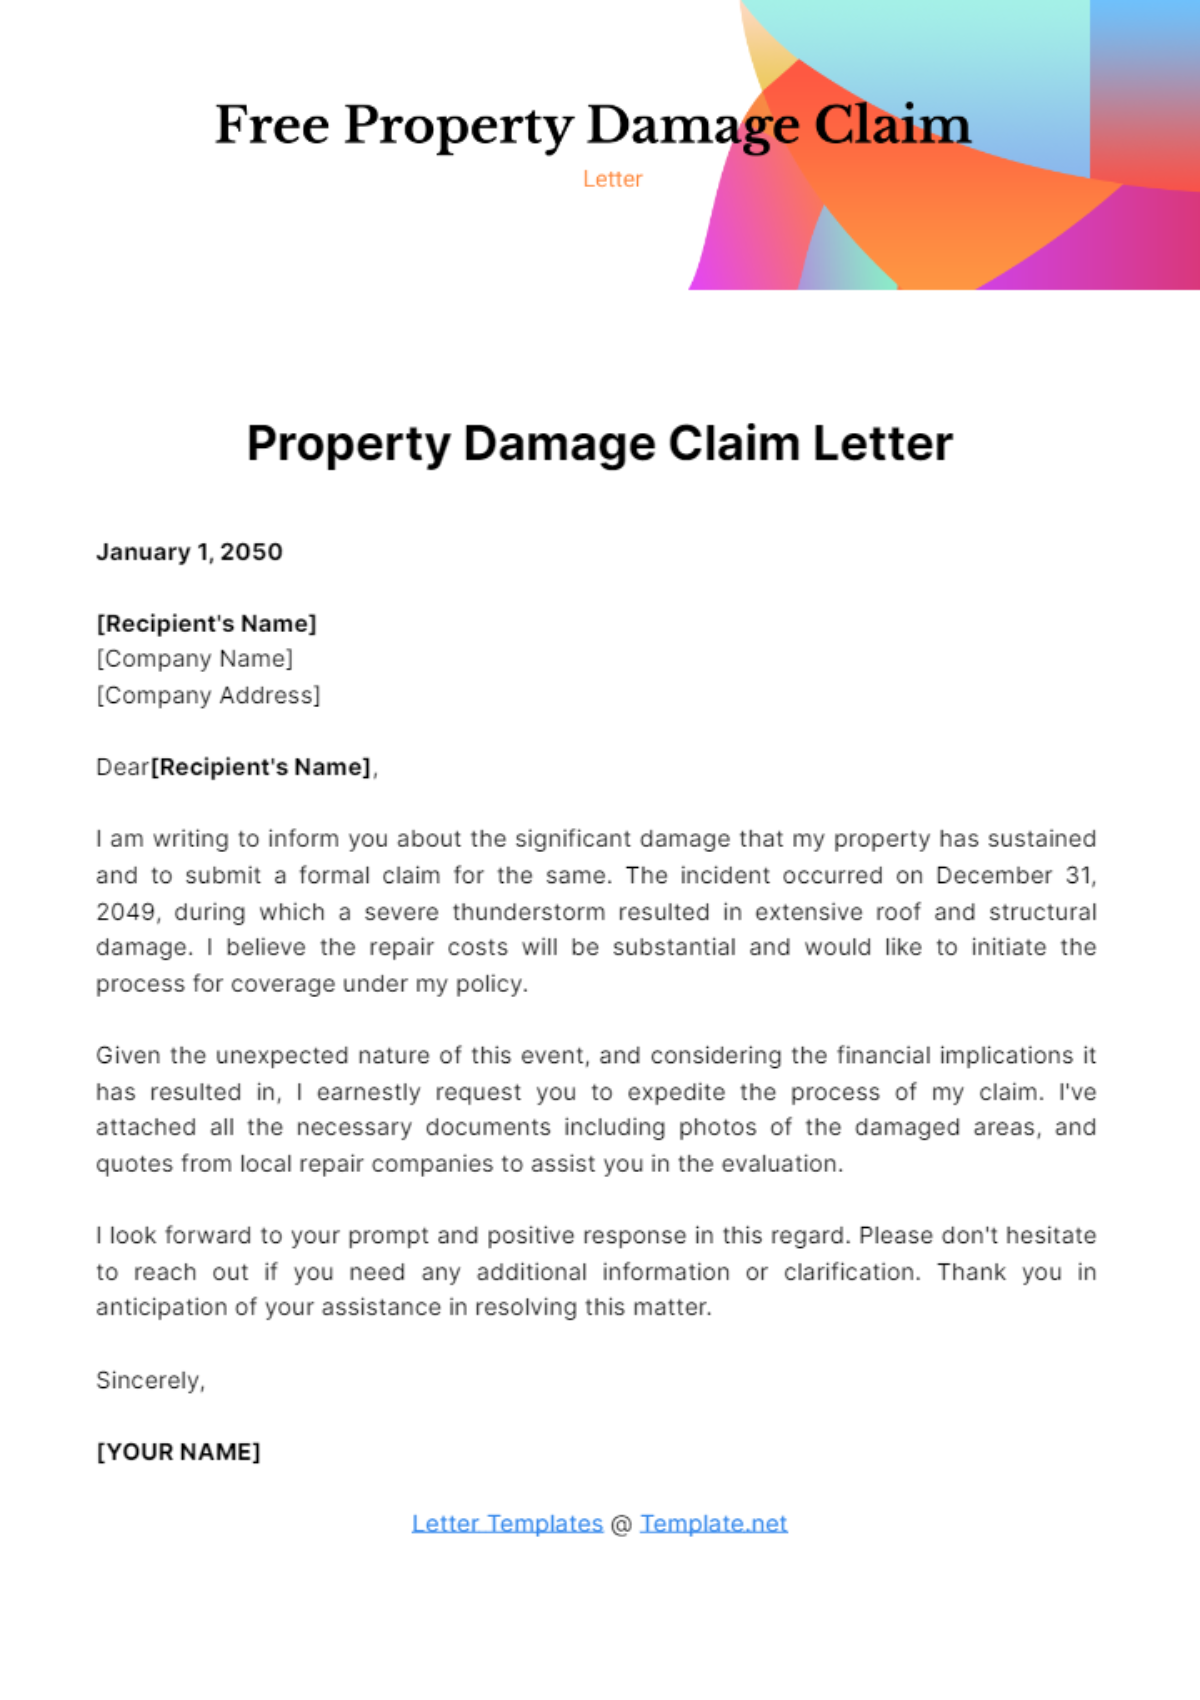 Property Damage Claim Letter Template